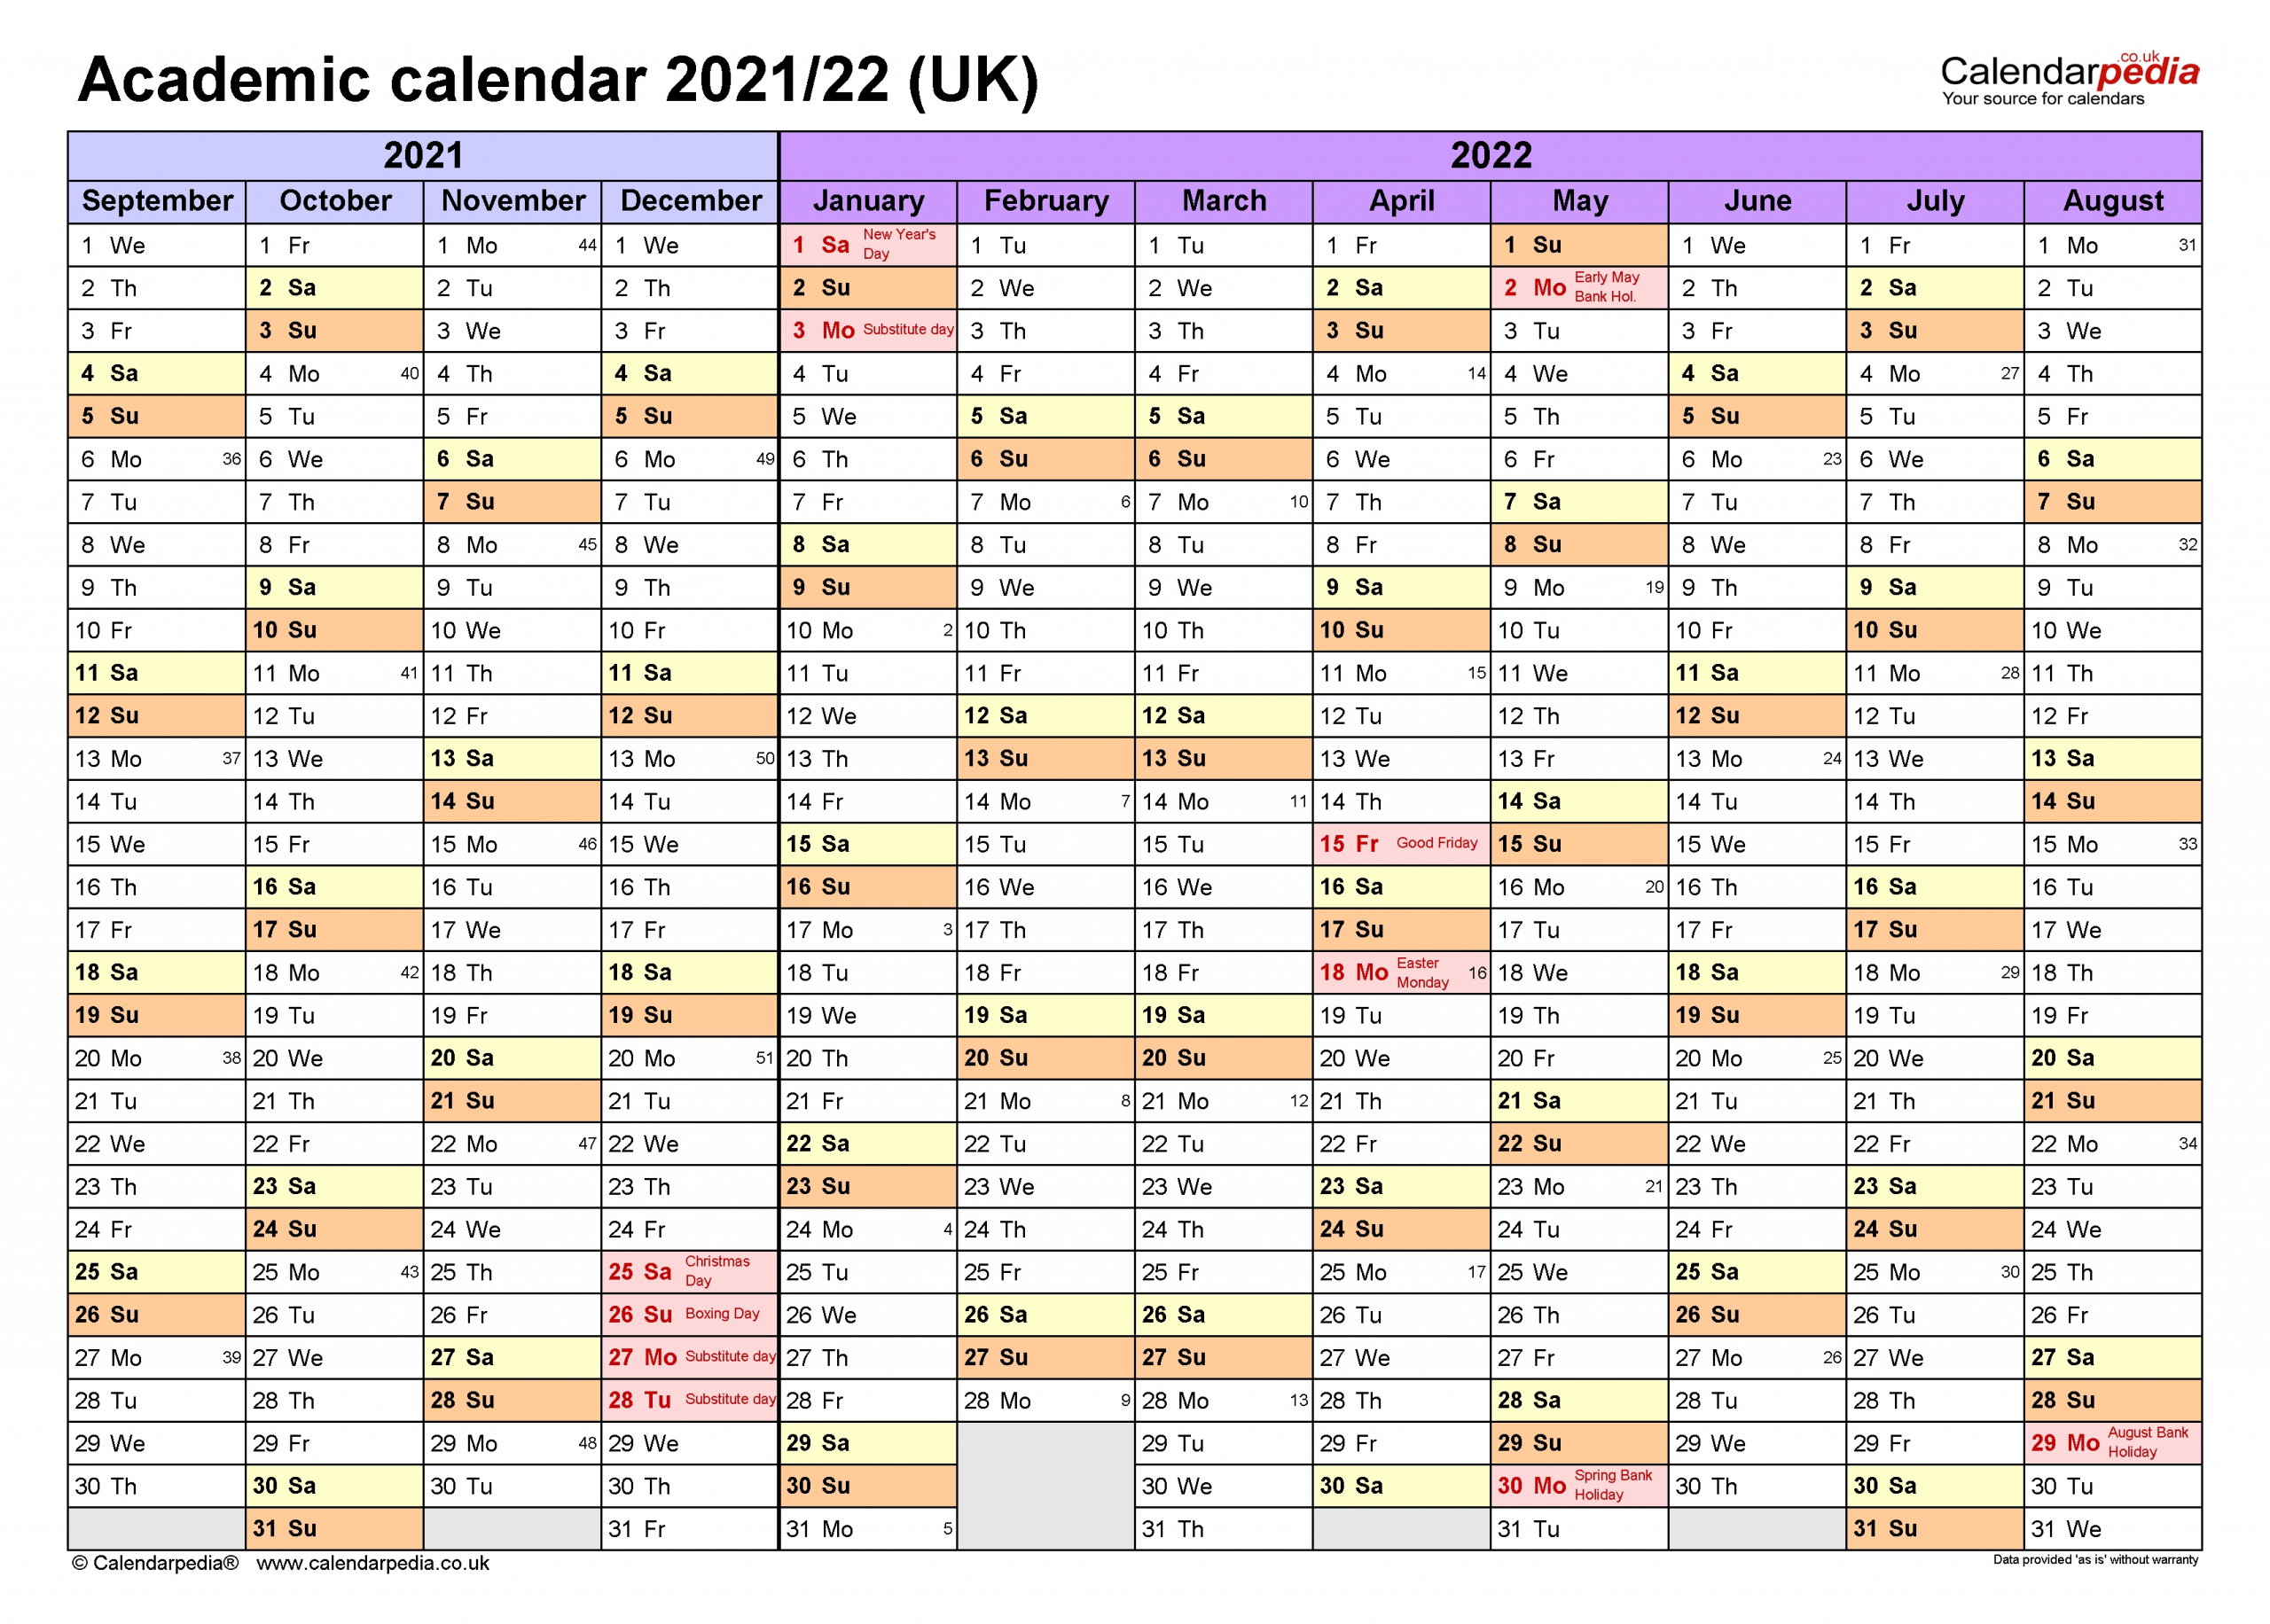 Academic Calendar 2021 22 | Printable Calendars 2021